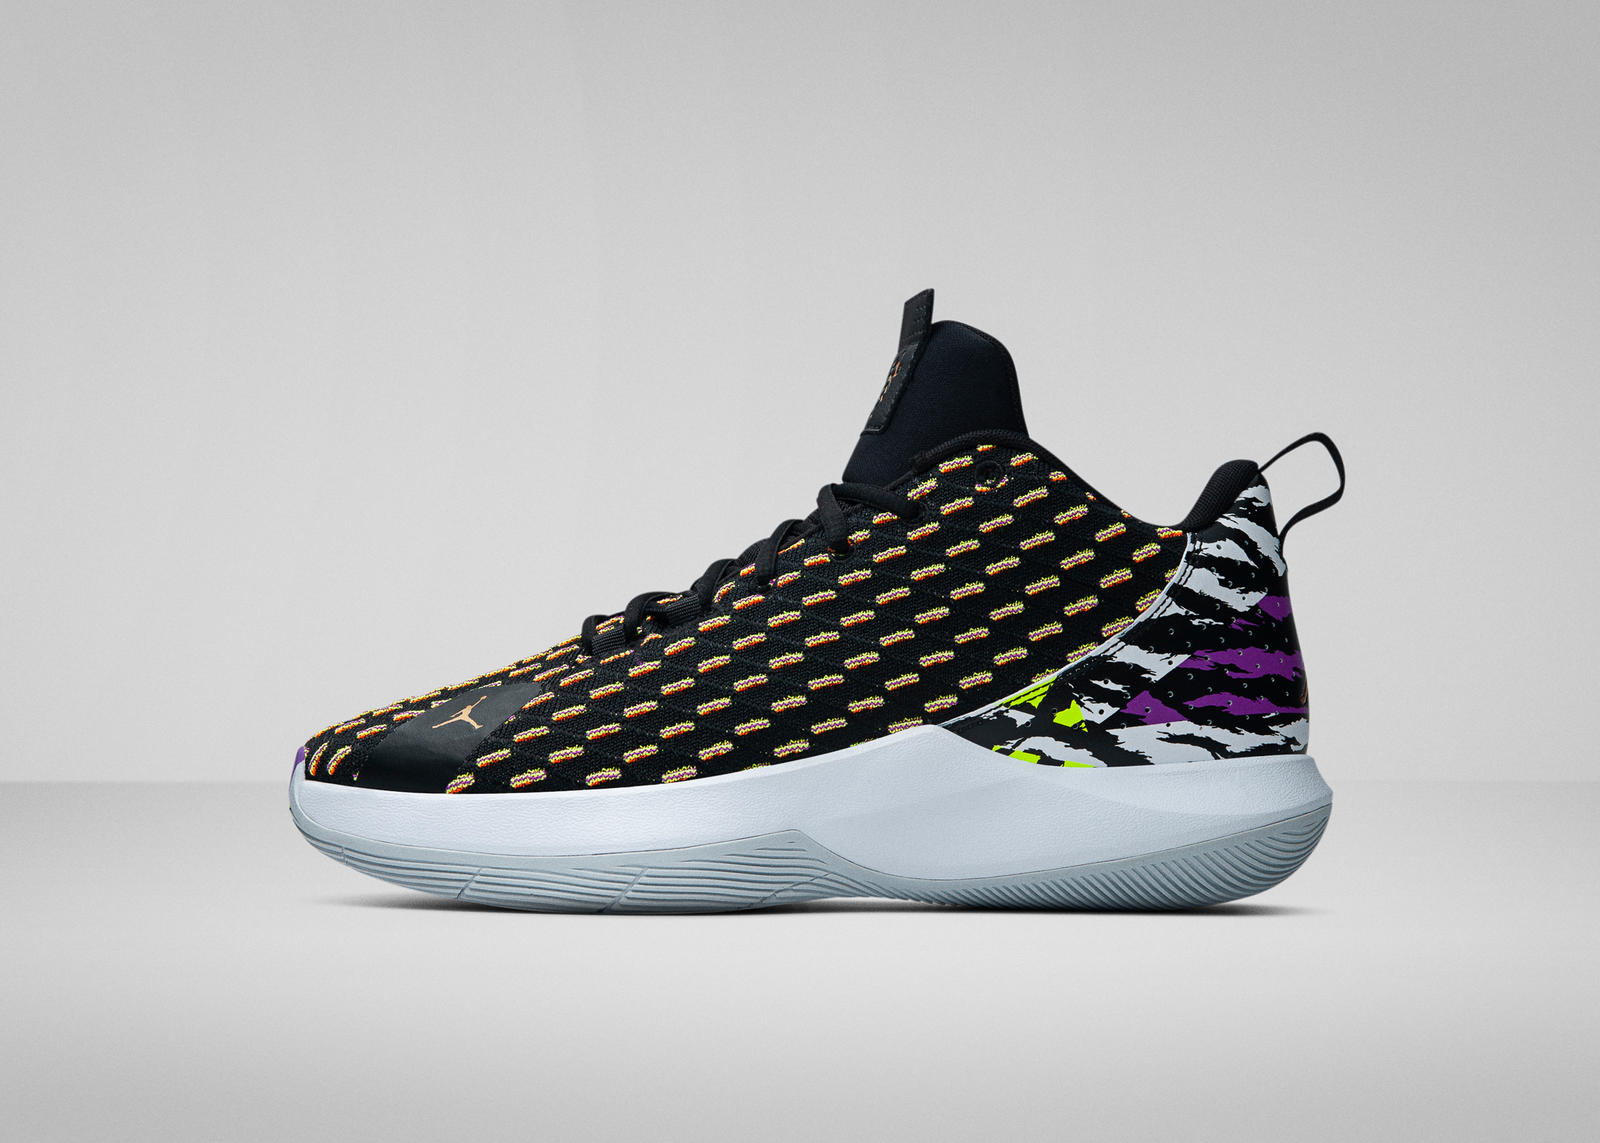 The Best Jordan Basketball Shoes: CP3.12